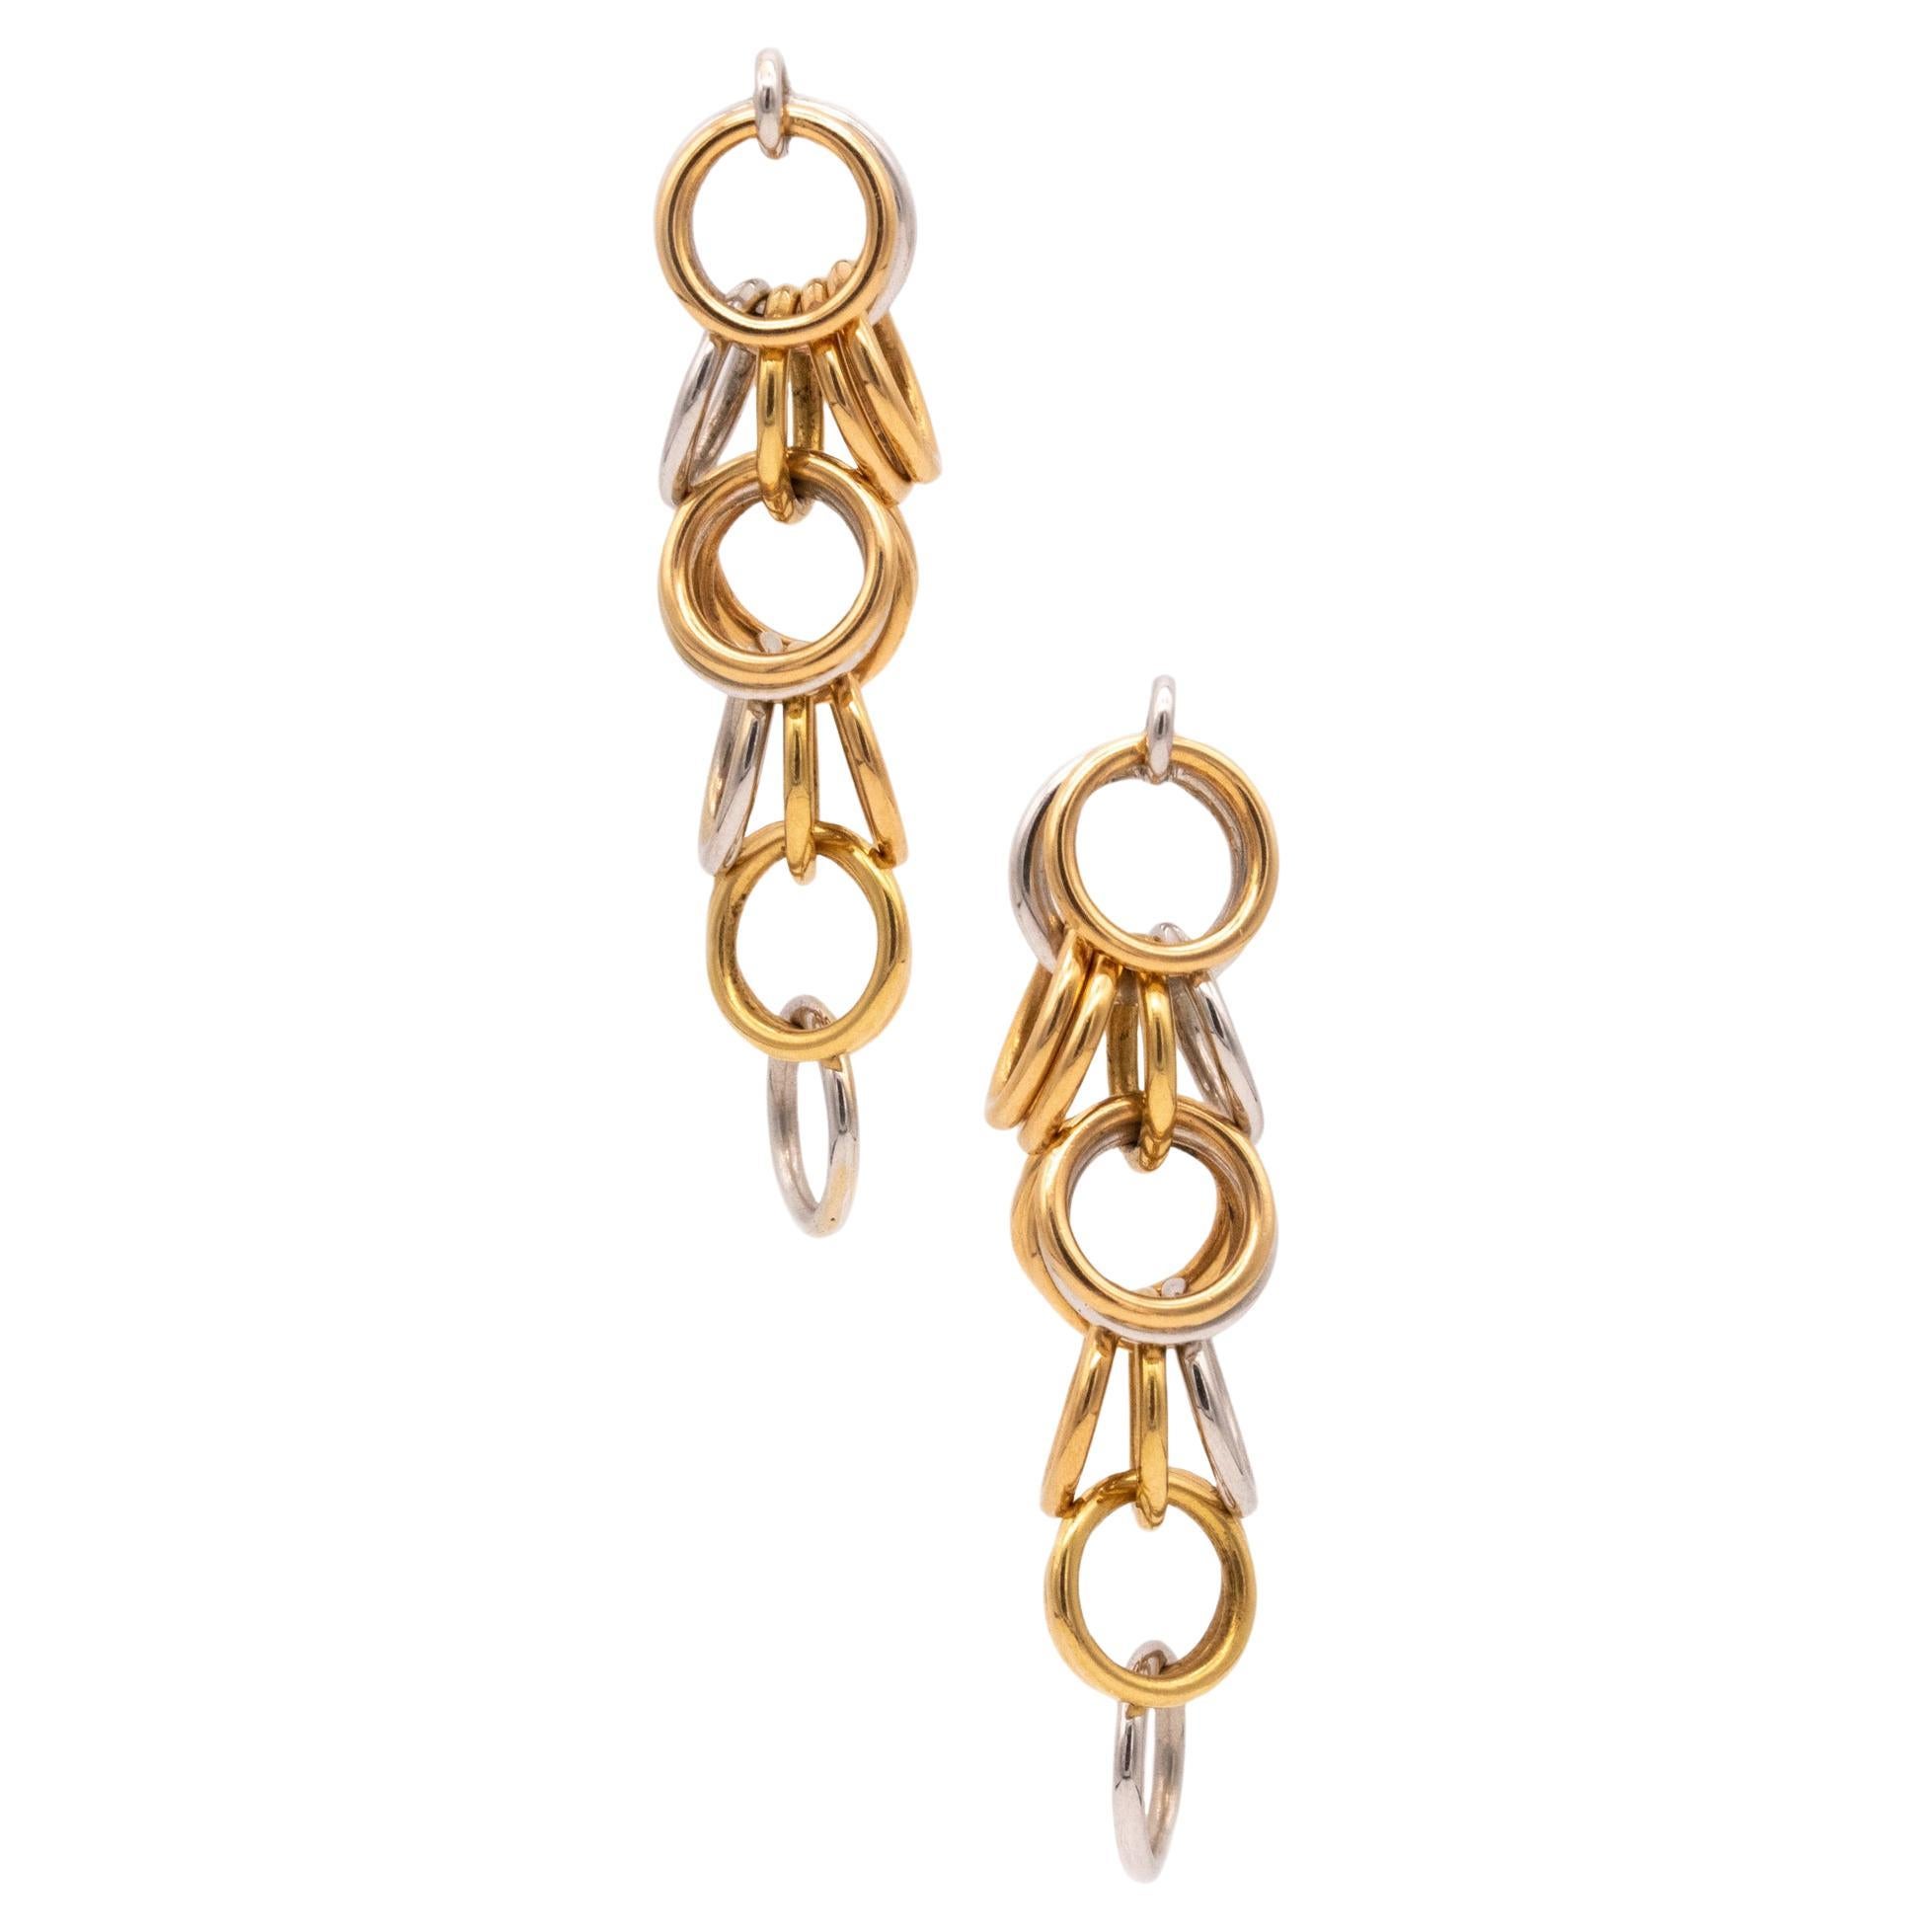 Hermes Paris Geometric Kinetic Drop Earrings with Circles Links in 18kt Gold